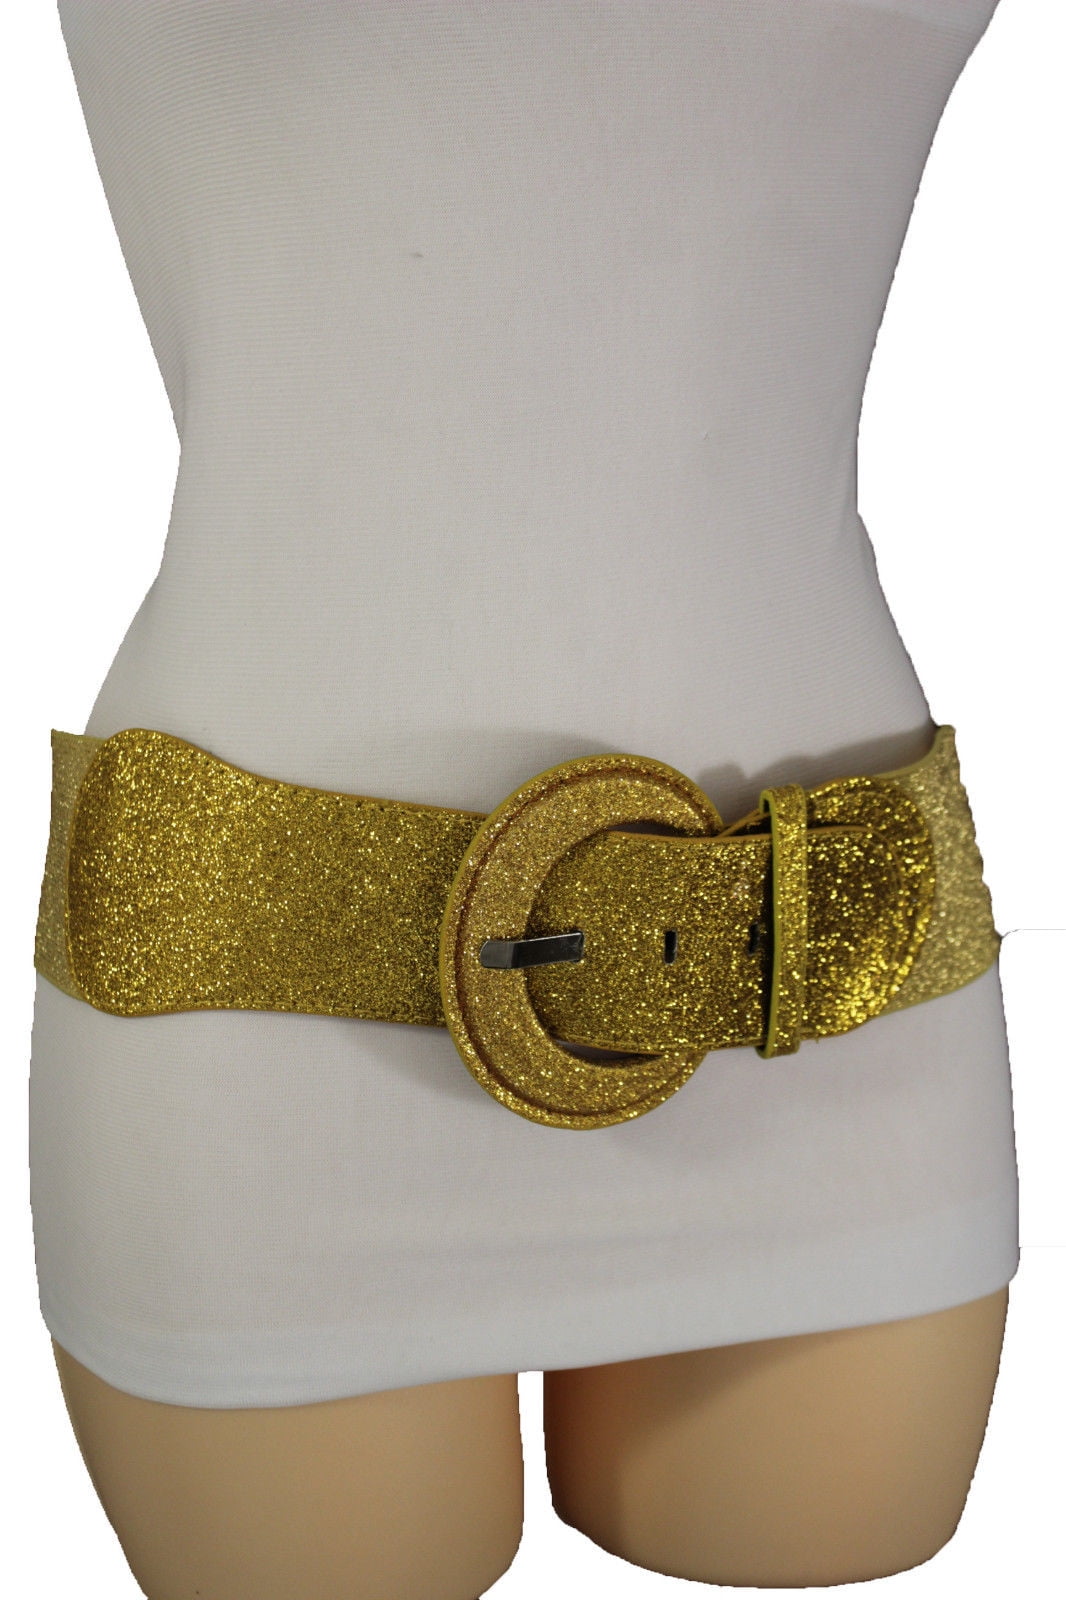 Women Gold Buckle Stretch Belt Hip Waist White Black Flowers Print Plus M L XL 